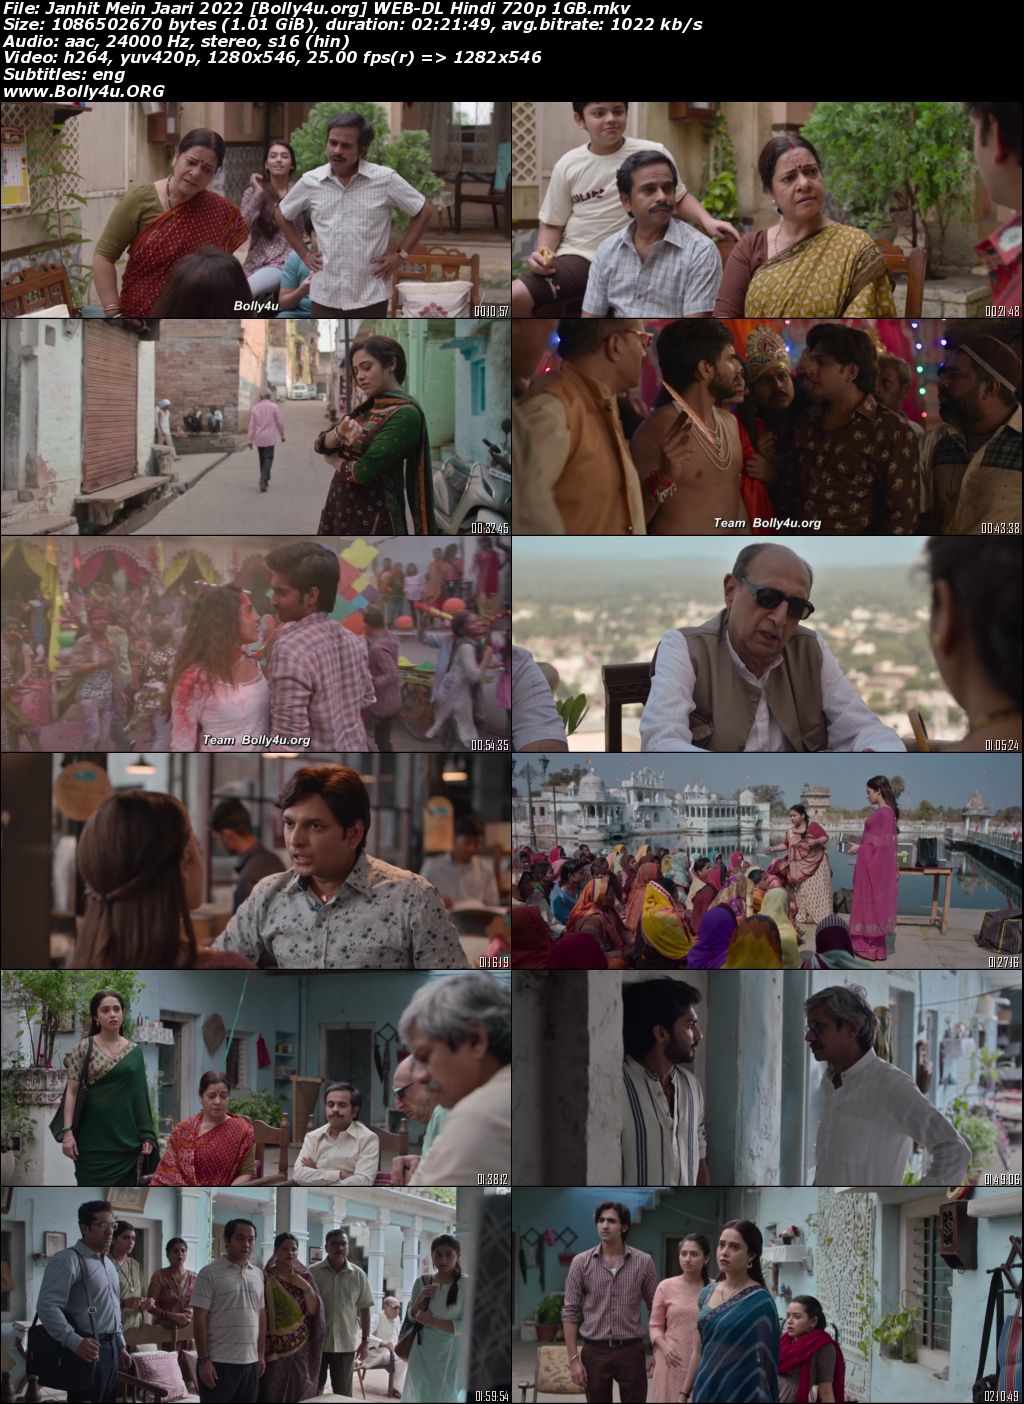 Janhit Mein Jaari 2022 WEB-DL Hindi Full Movie Download